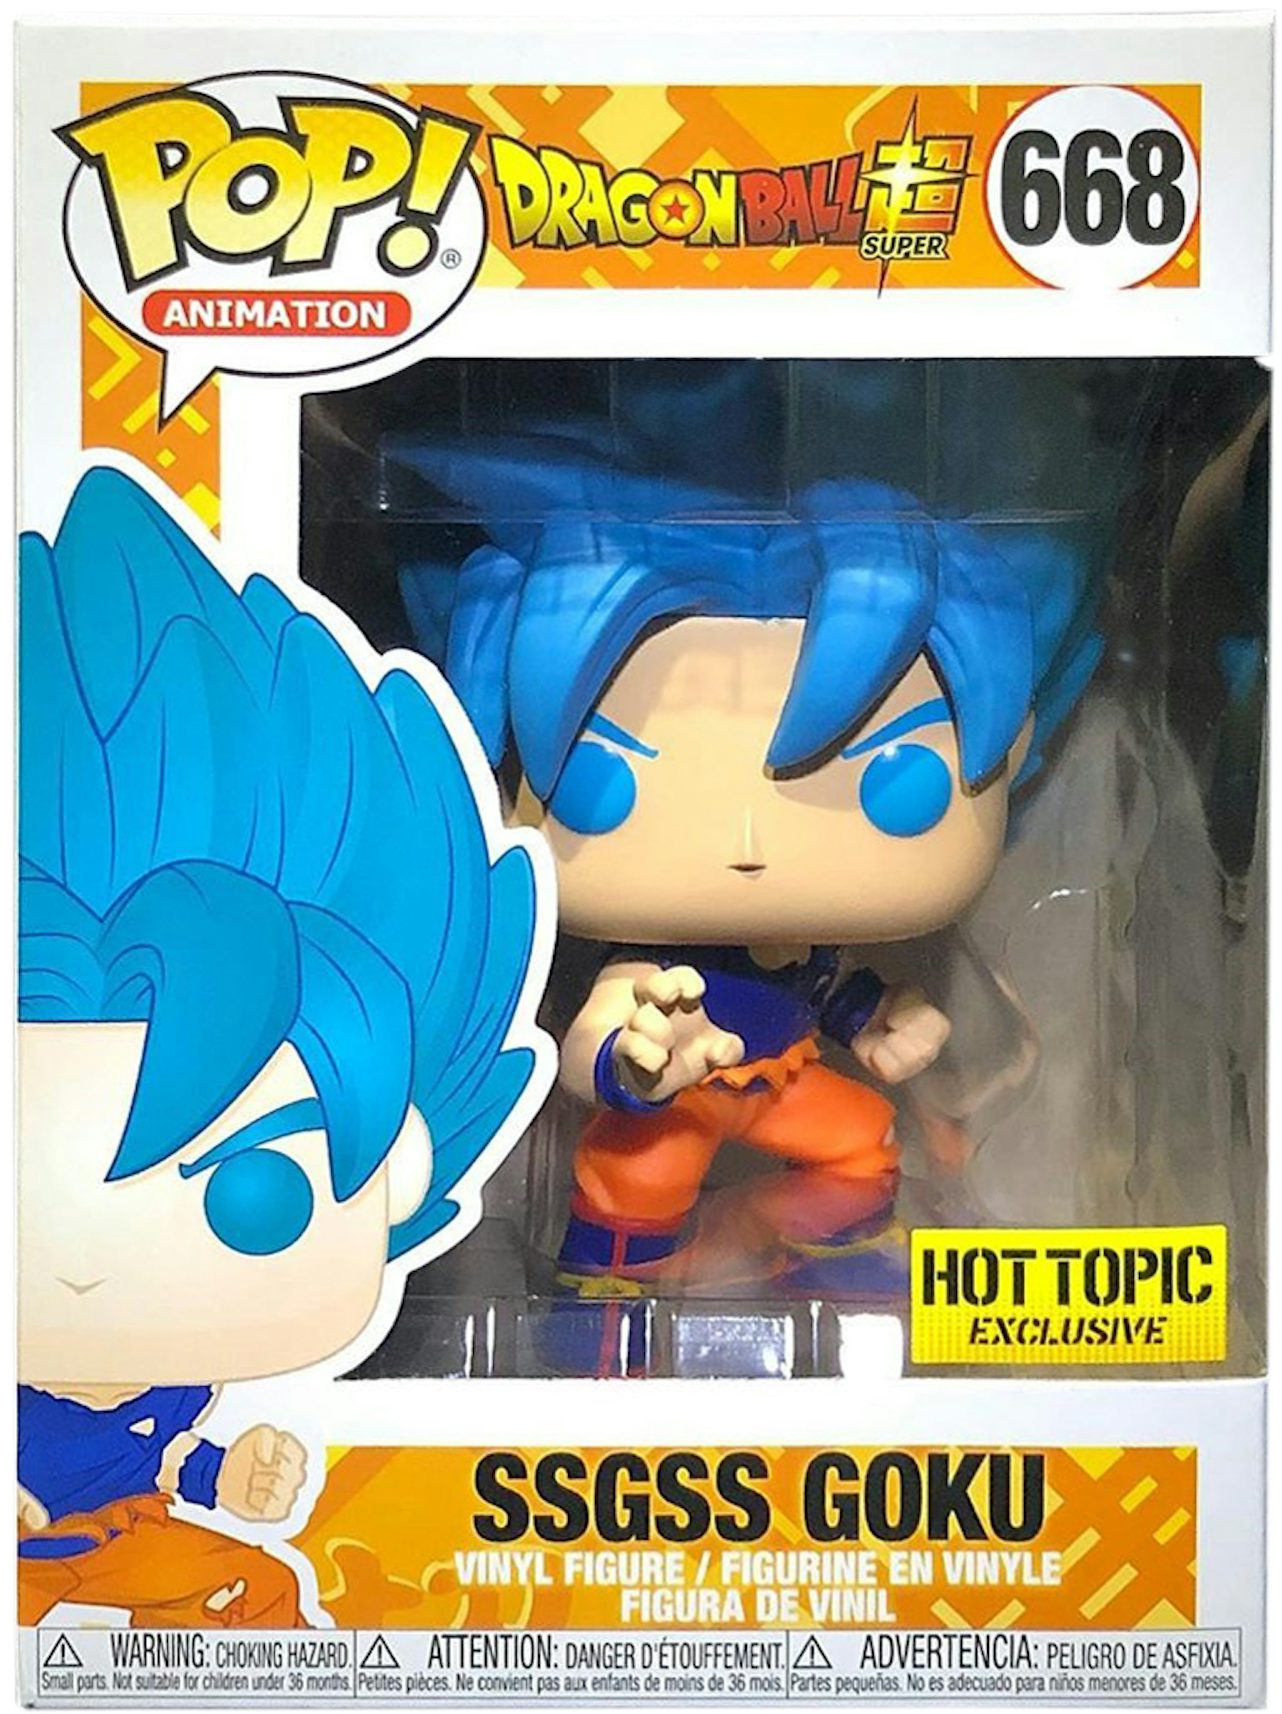 Funko Pop! Animation Dragonball Super Super Saiyan Rose Goku Black Hot  Topic Exclusive Figure #260 - US